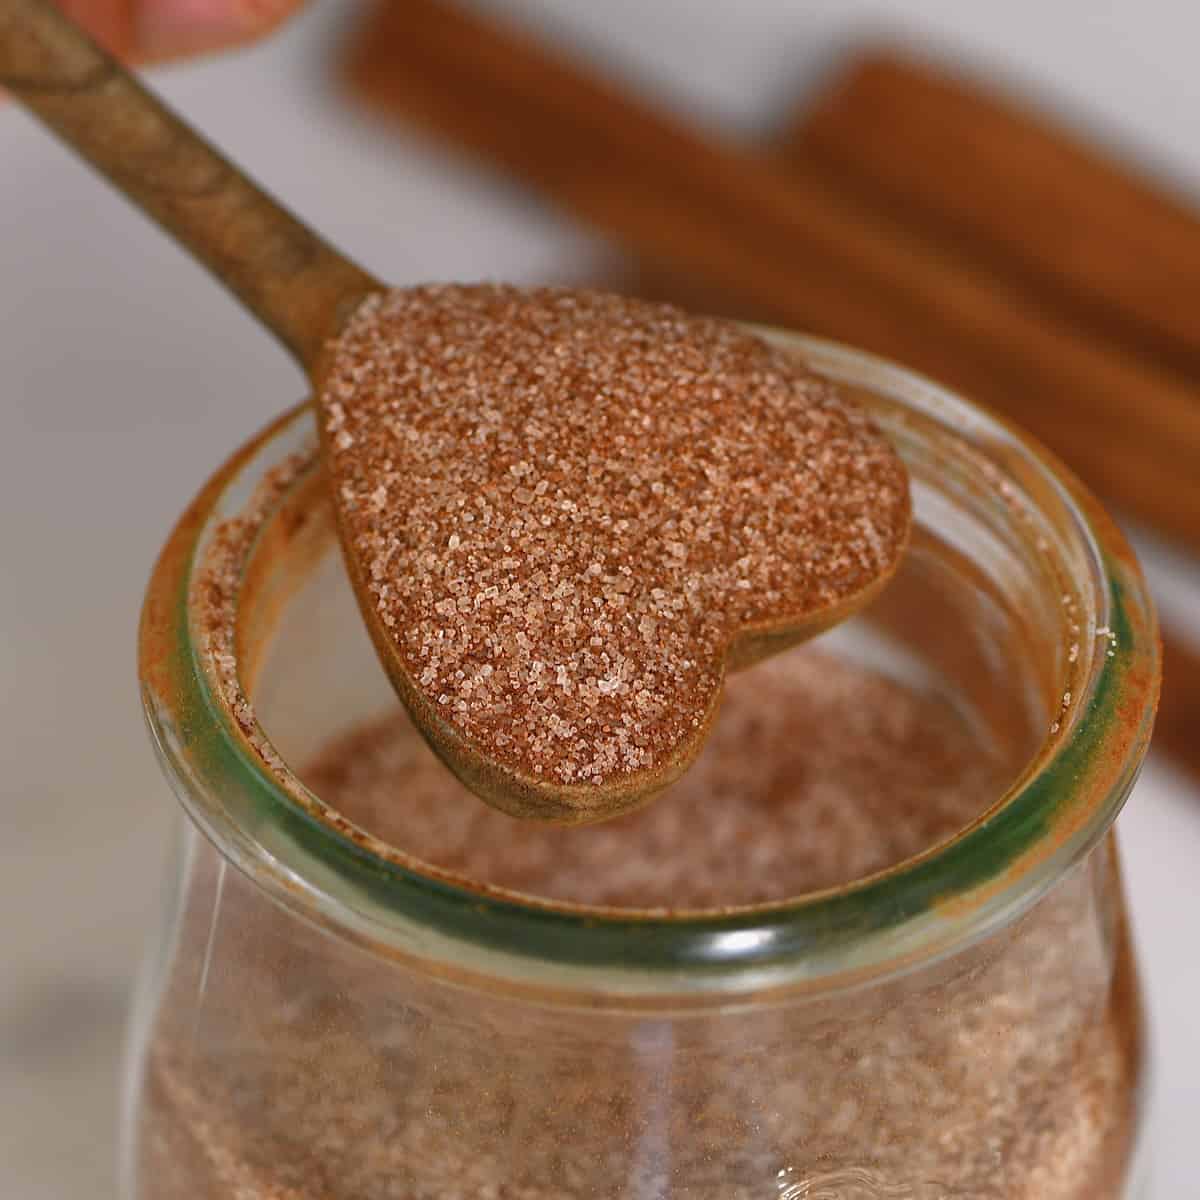 A spoonful of homemade cinnamon sugar